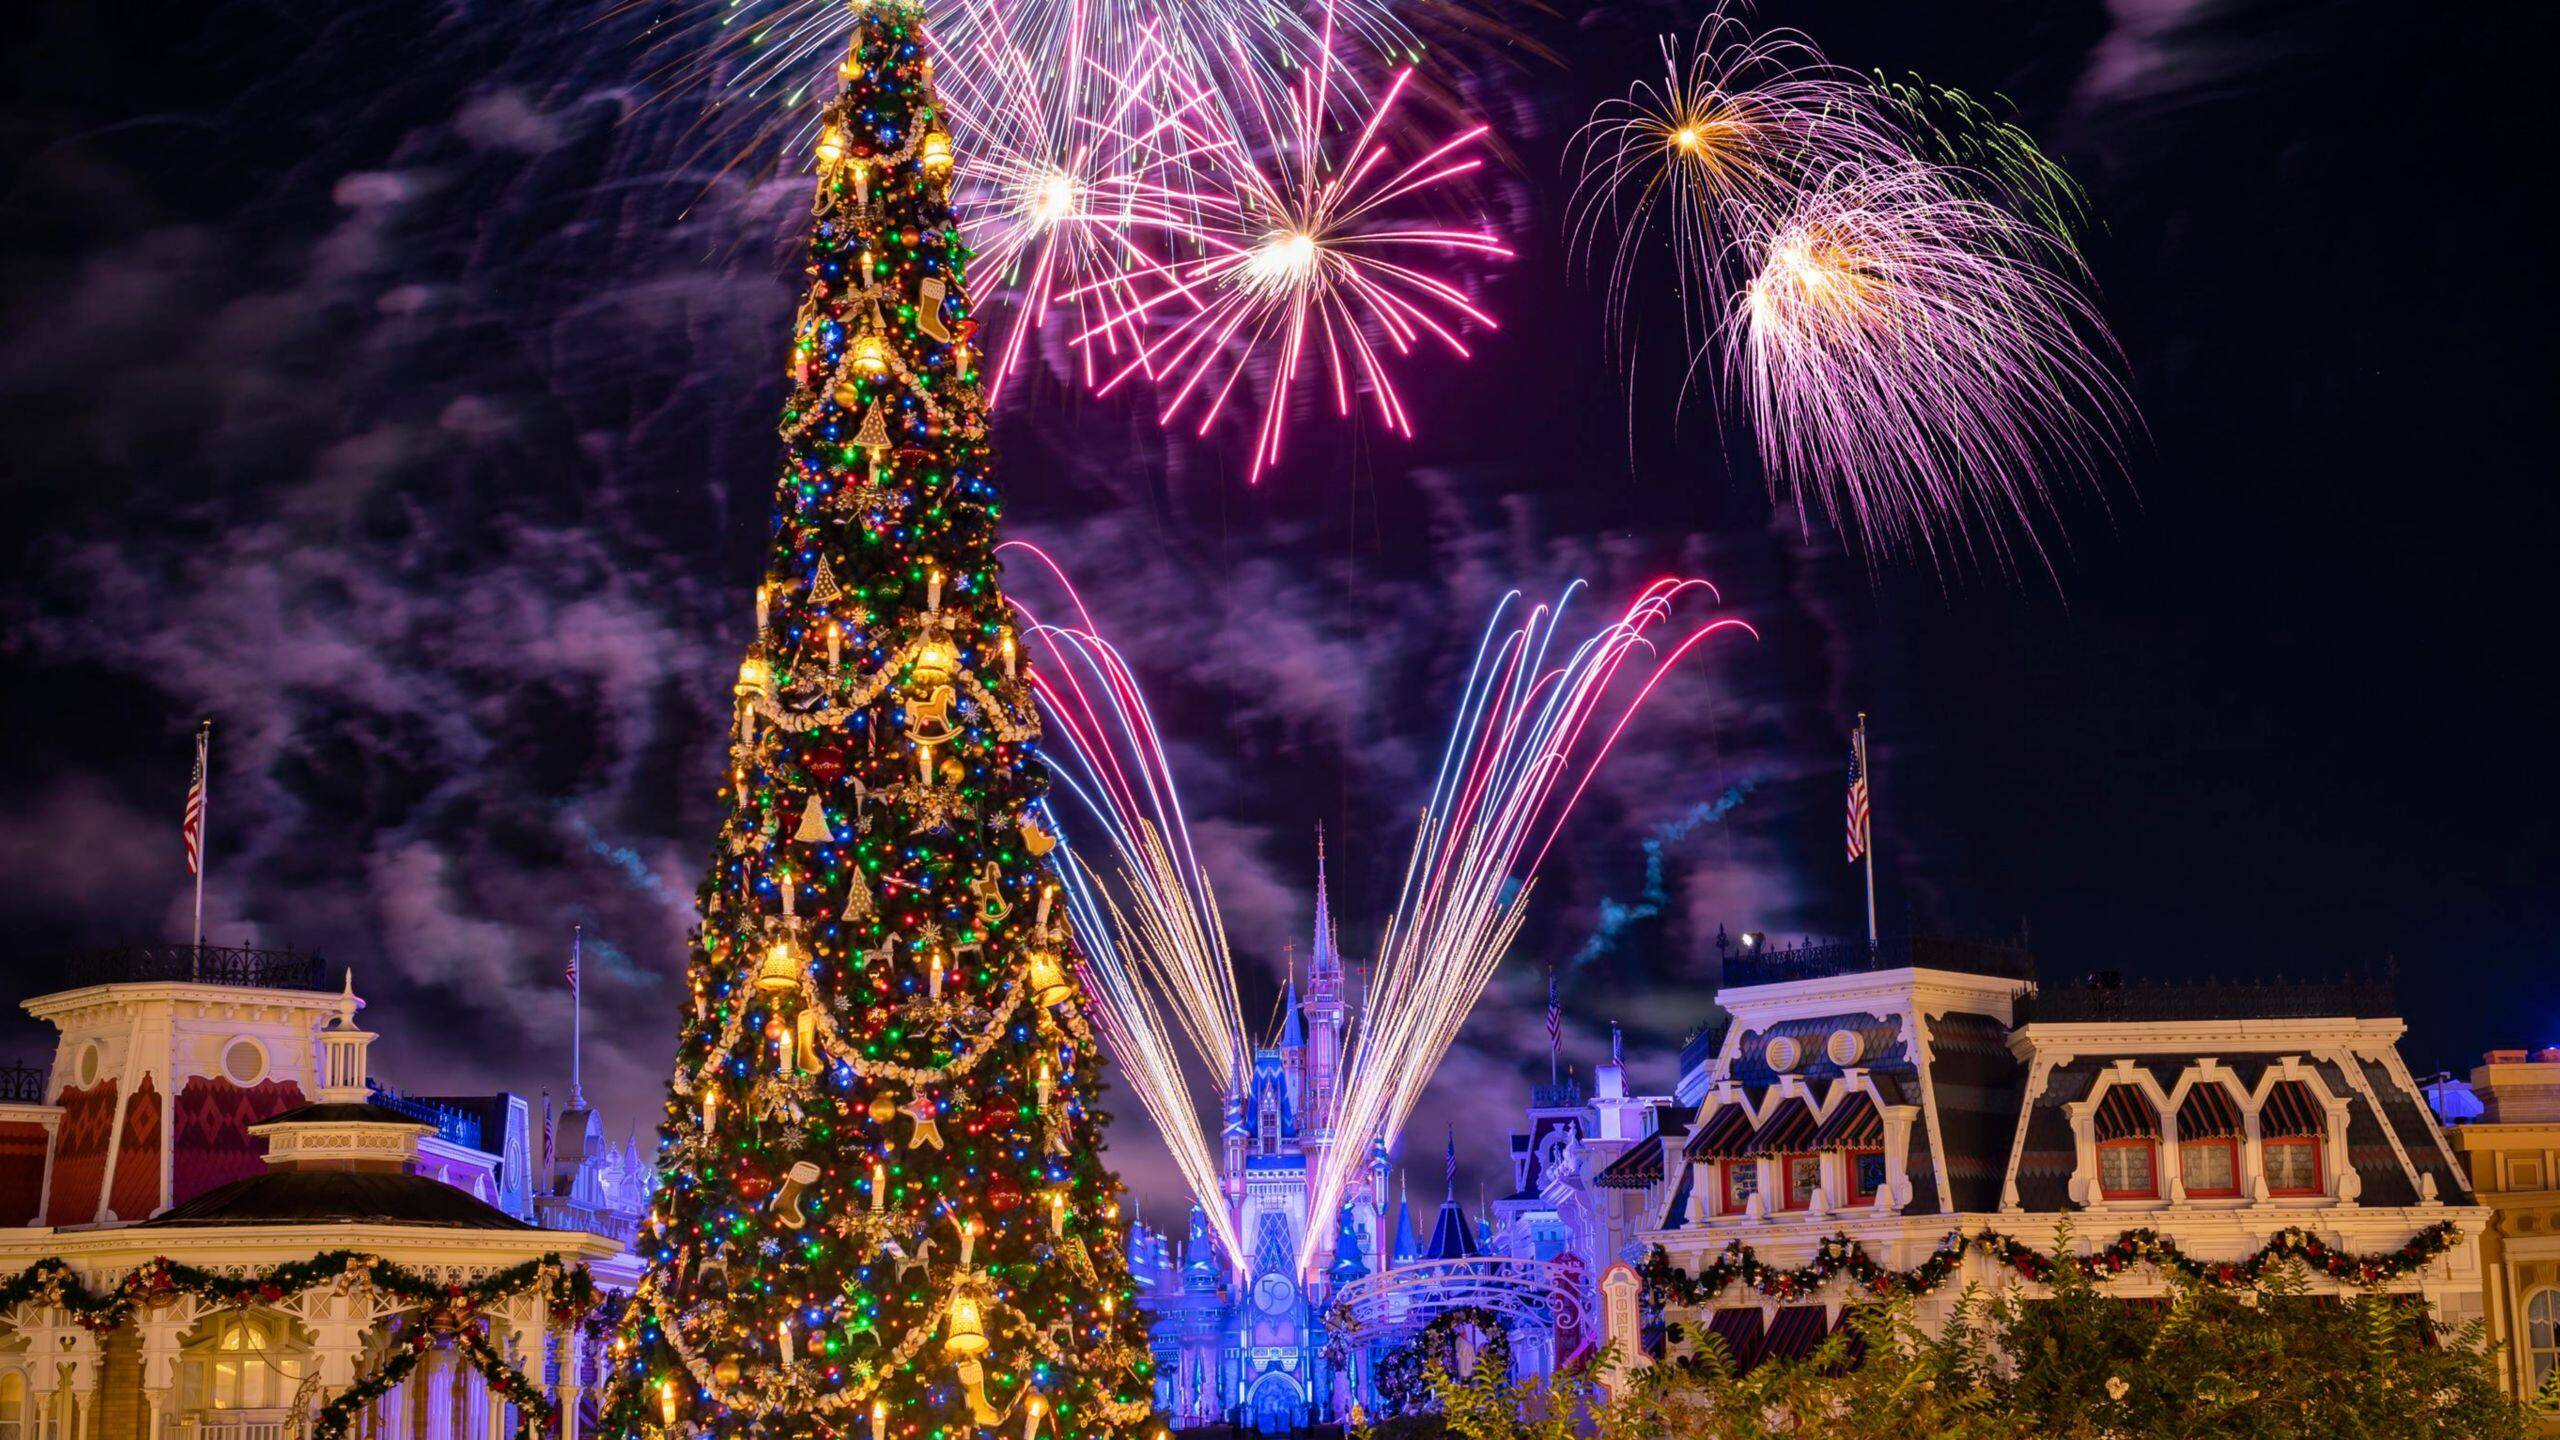 A Peek Inside 'Frozen Fireworks' at Disney's Hollywood Studios